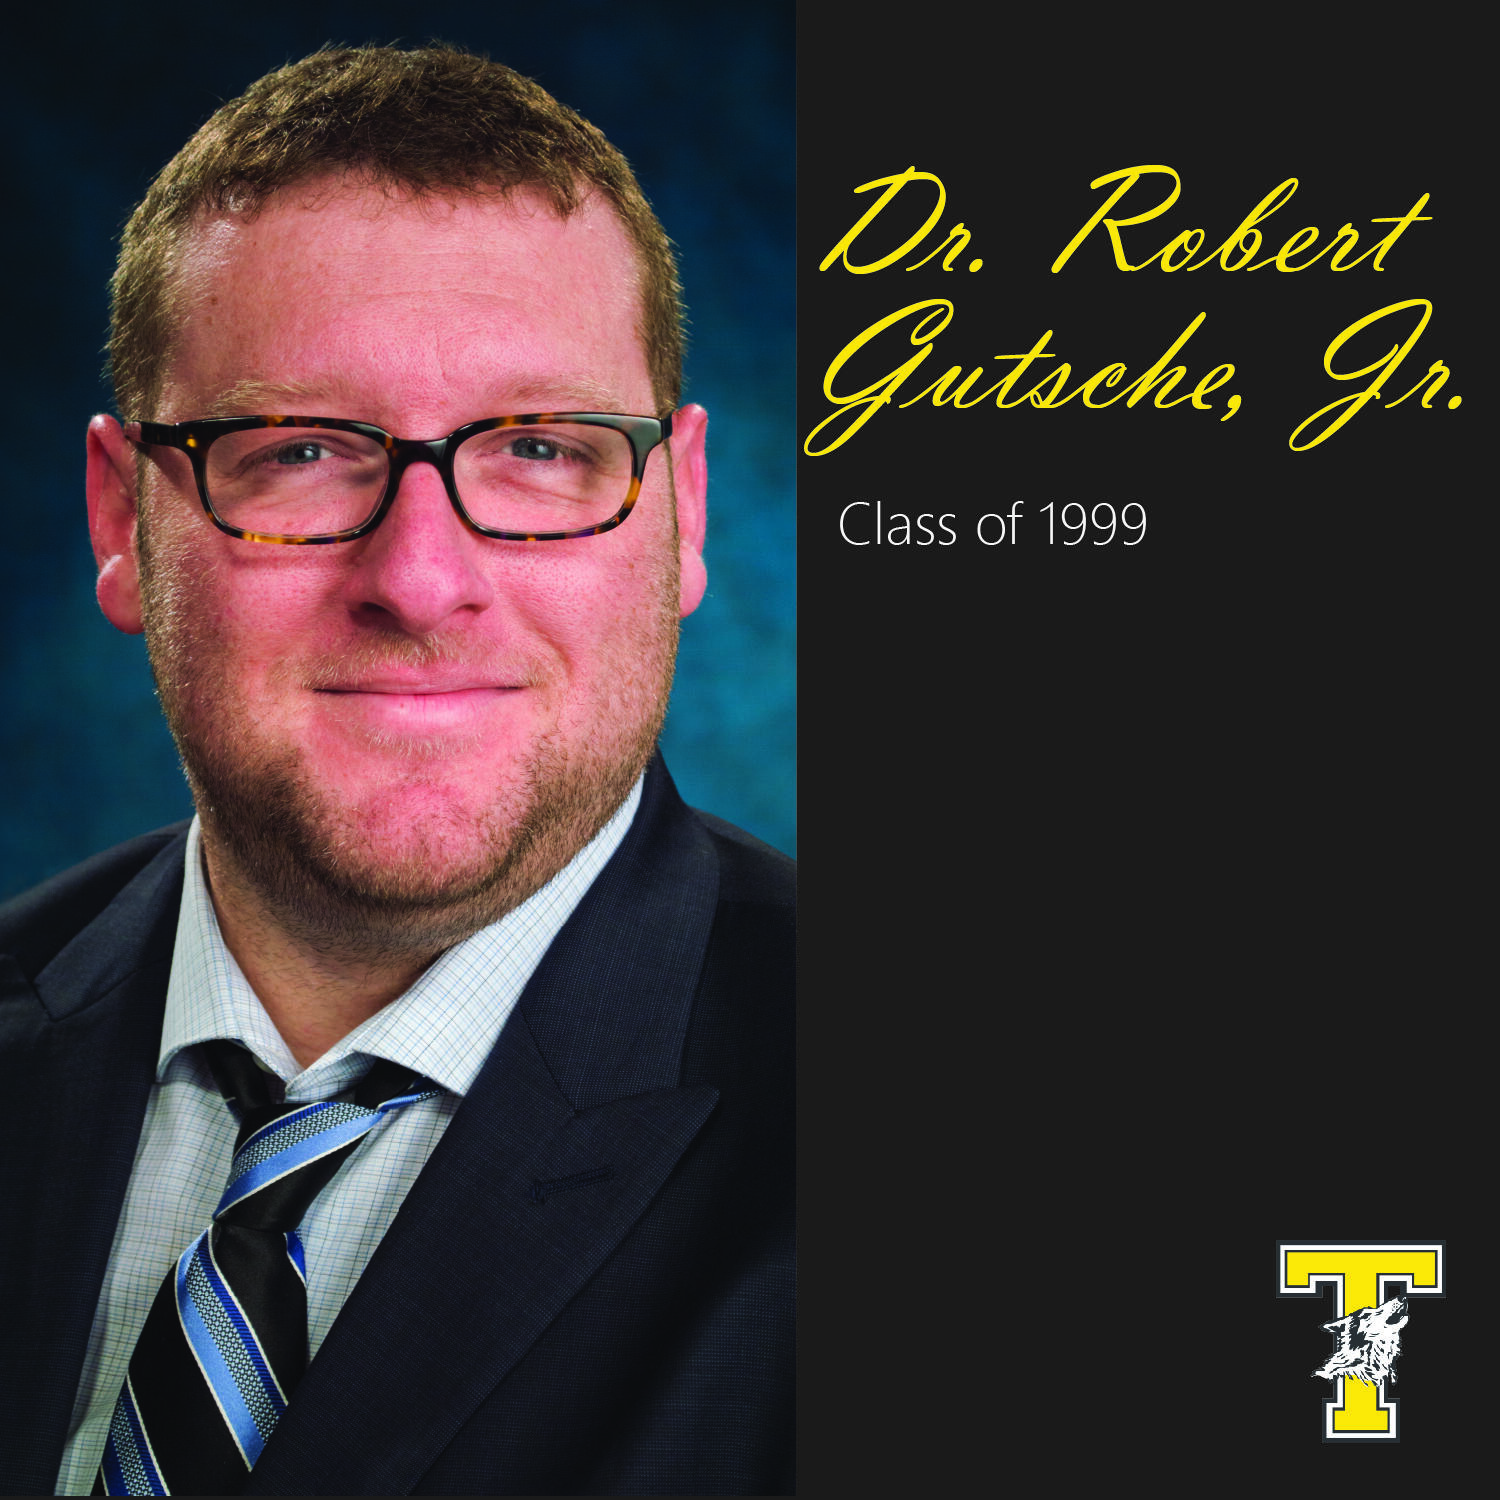 Class of 1999 - Doctor Robert Gutsche, Junior